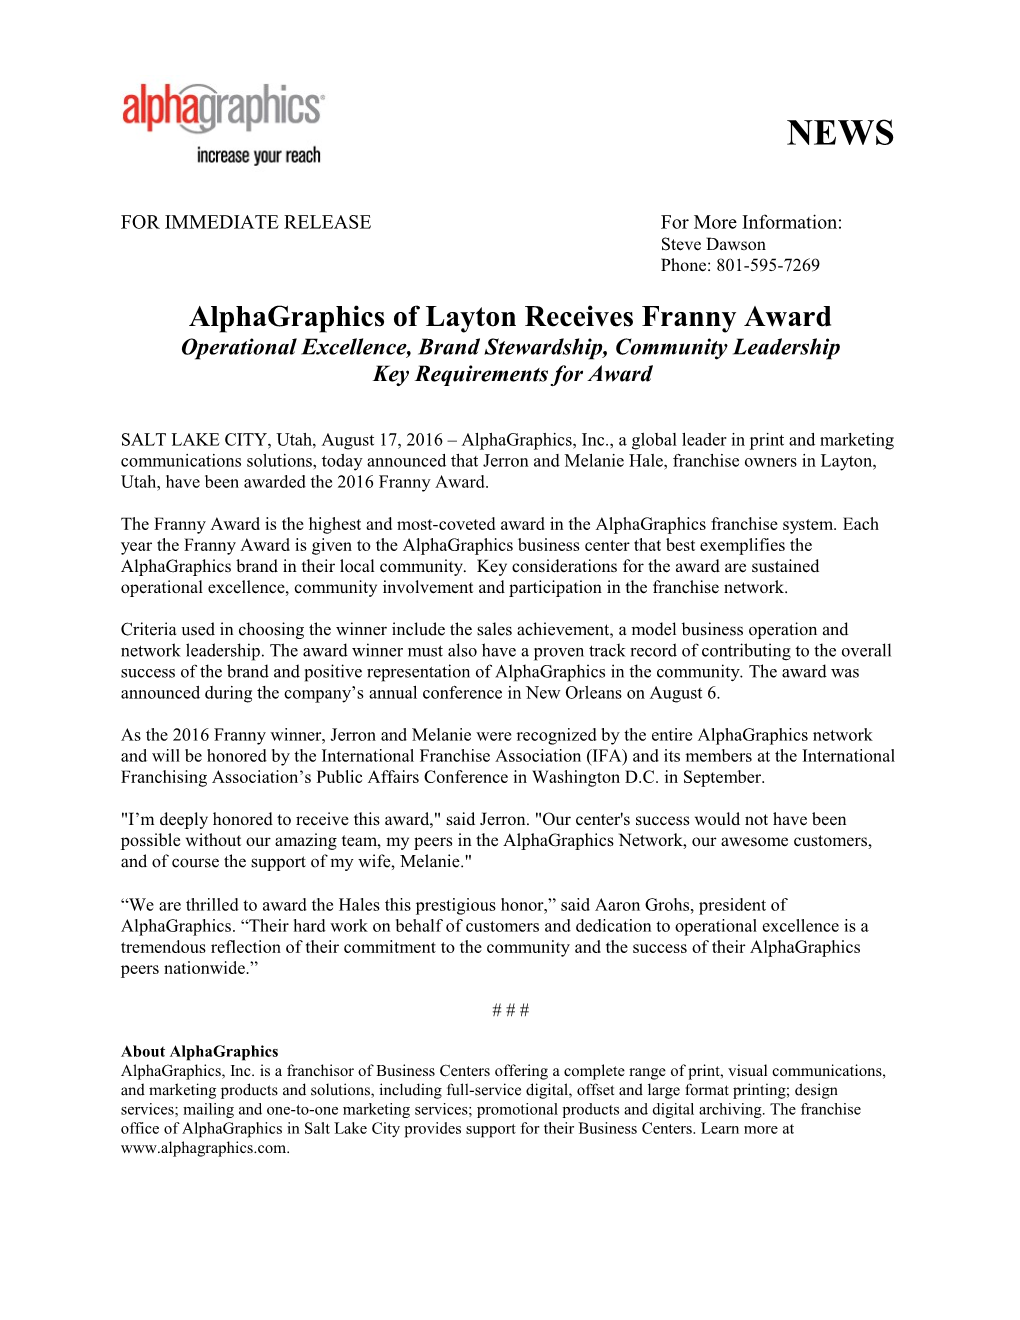 Alphagraphics of Layton Receives Franny Award